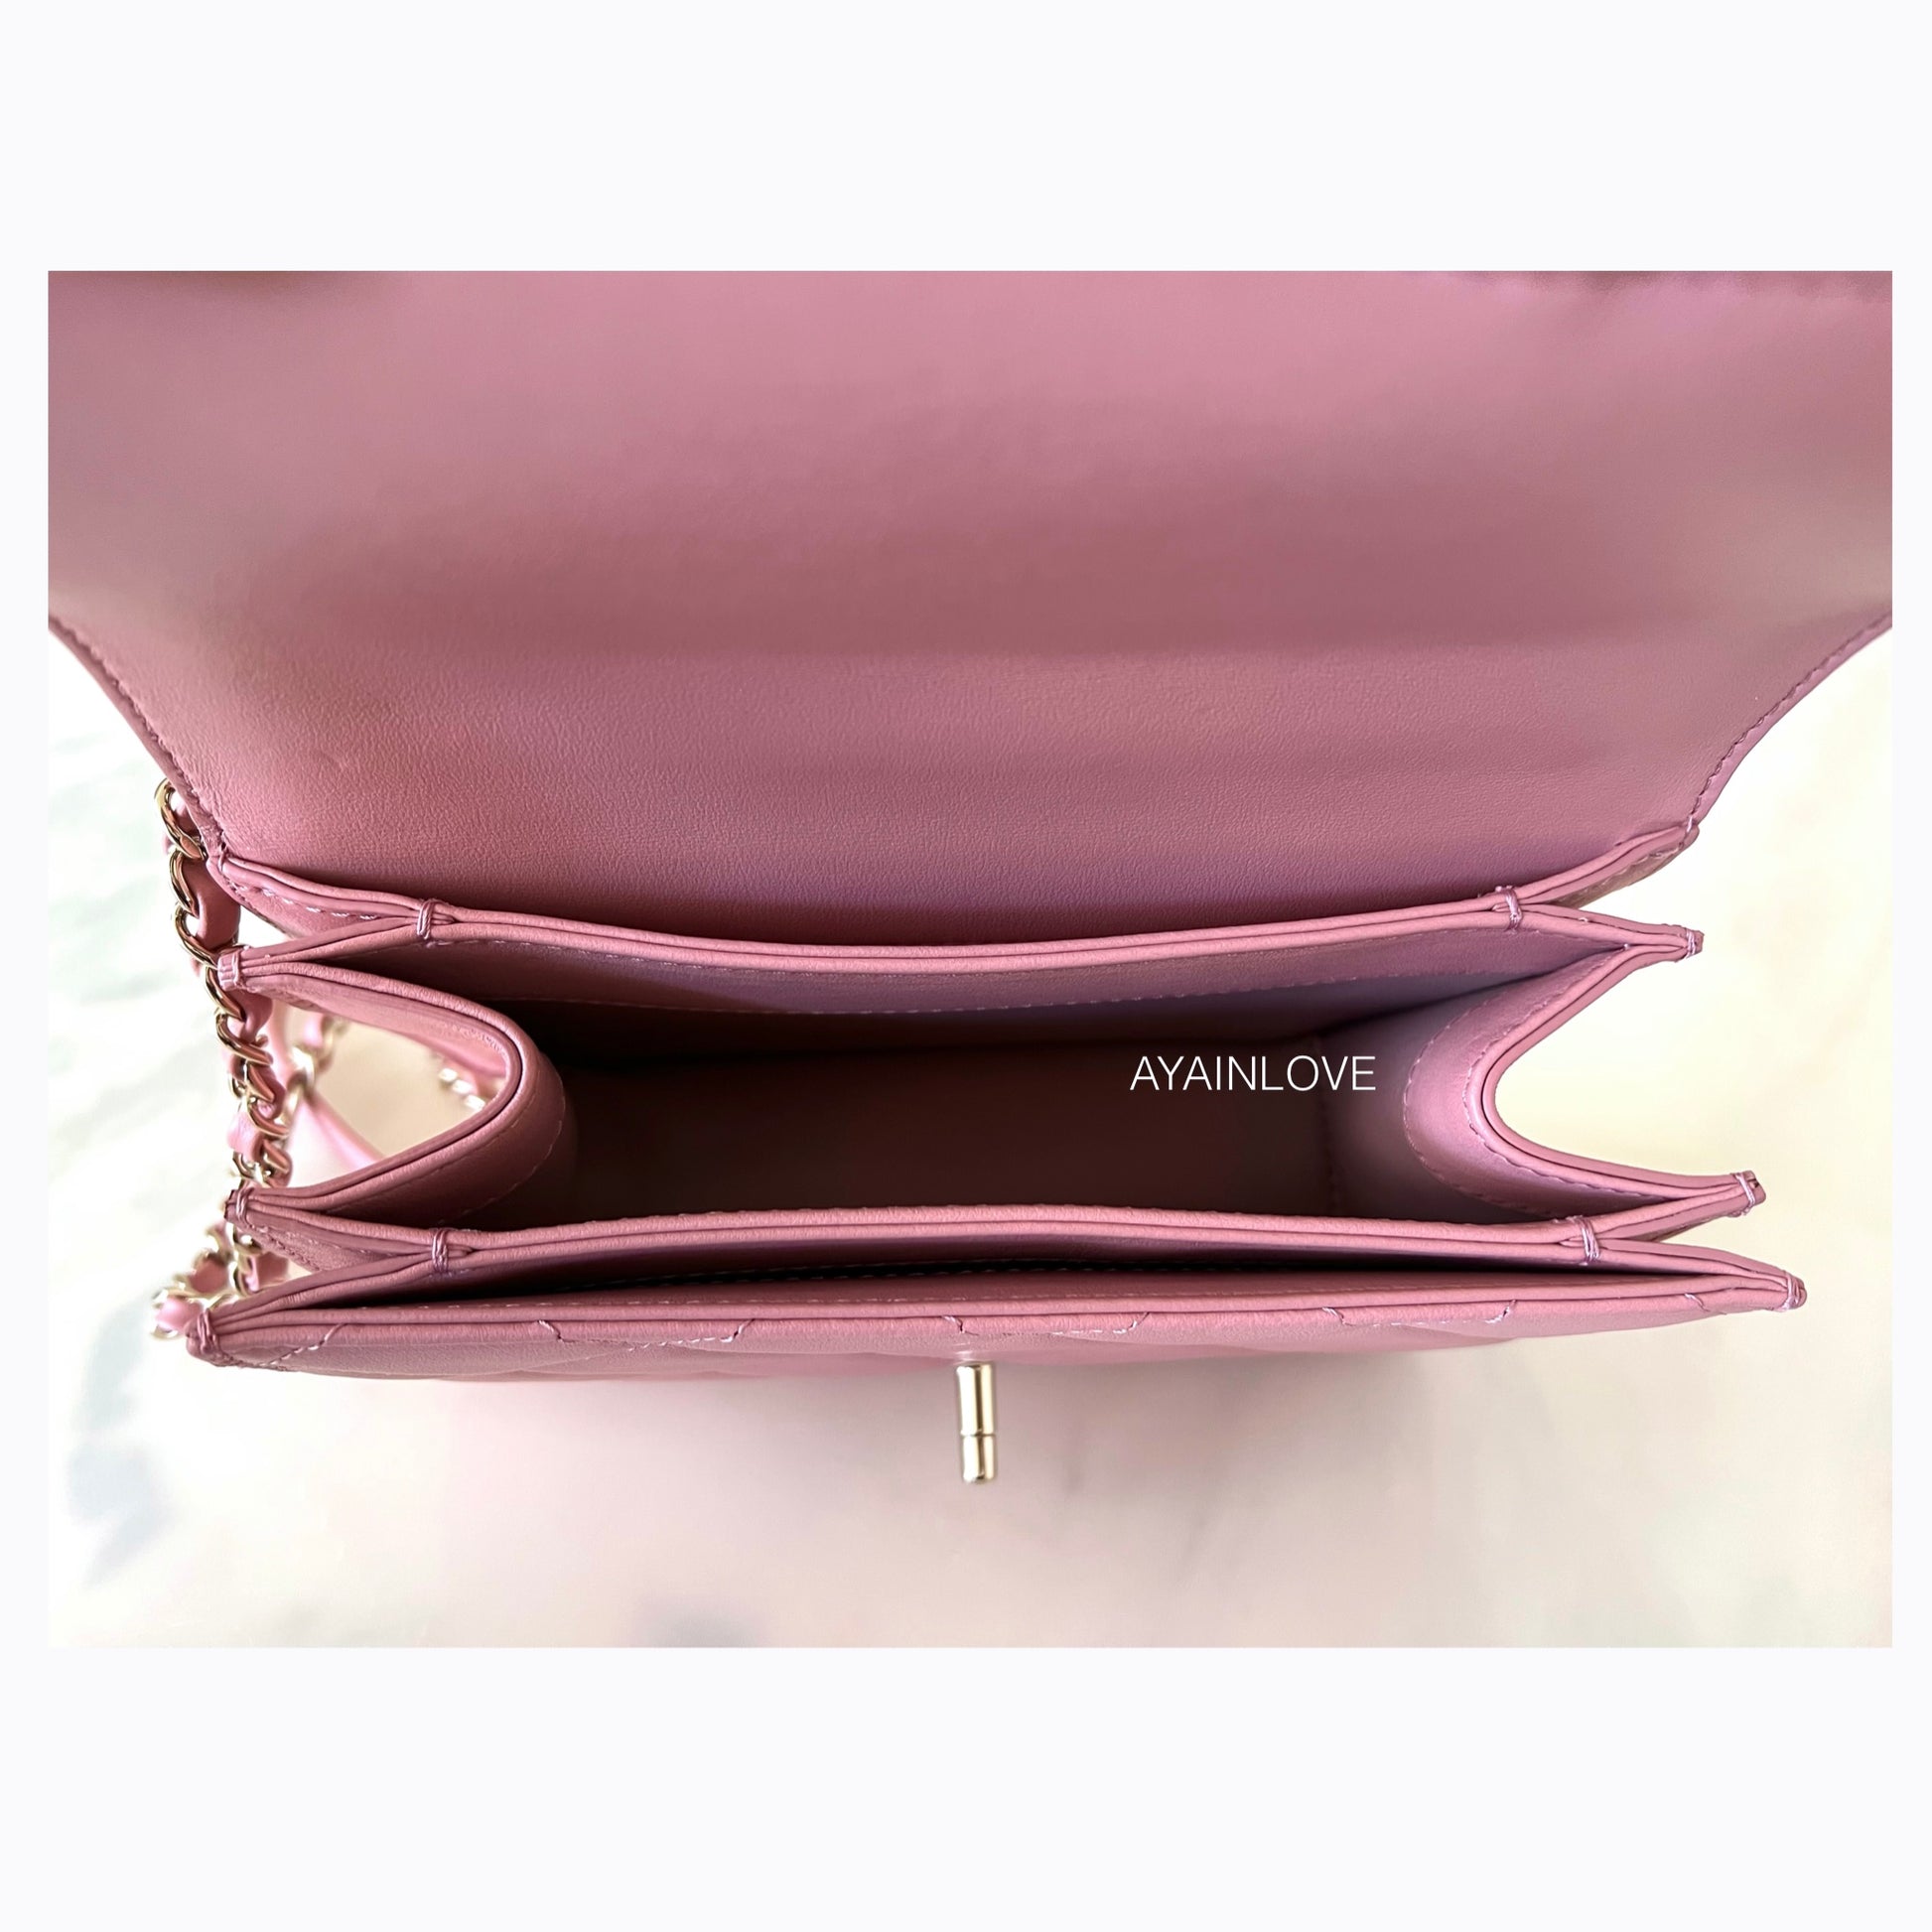 Pink Denim Coco Flap Bag